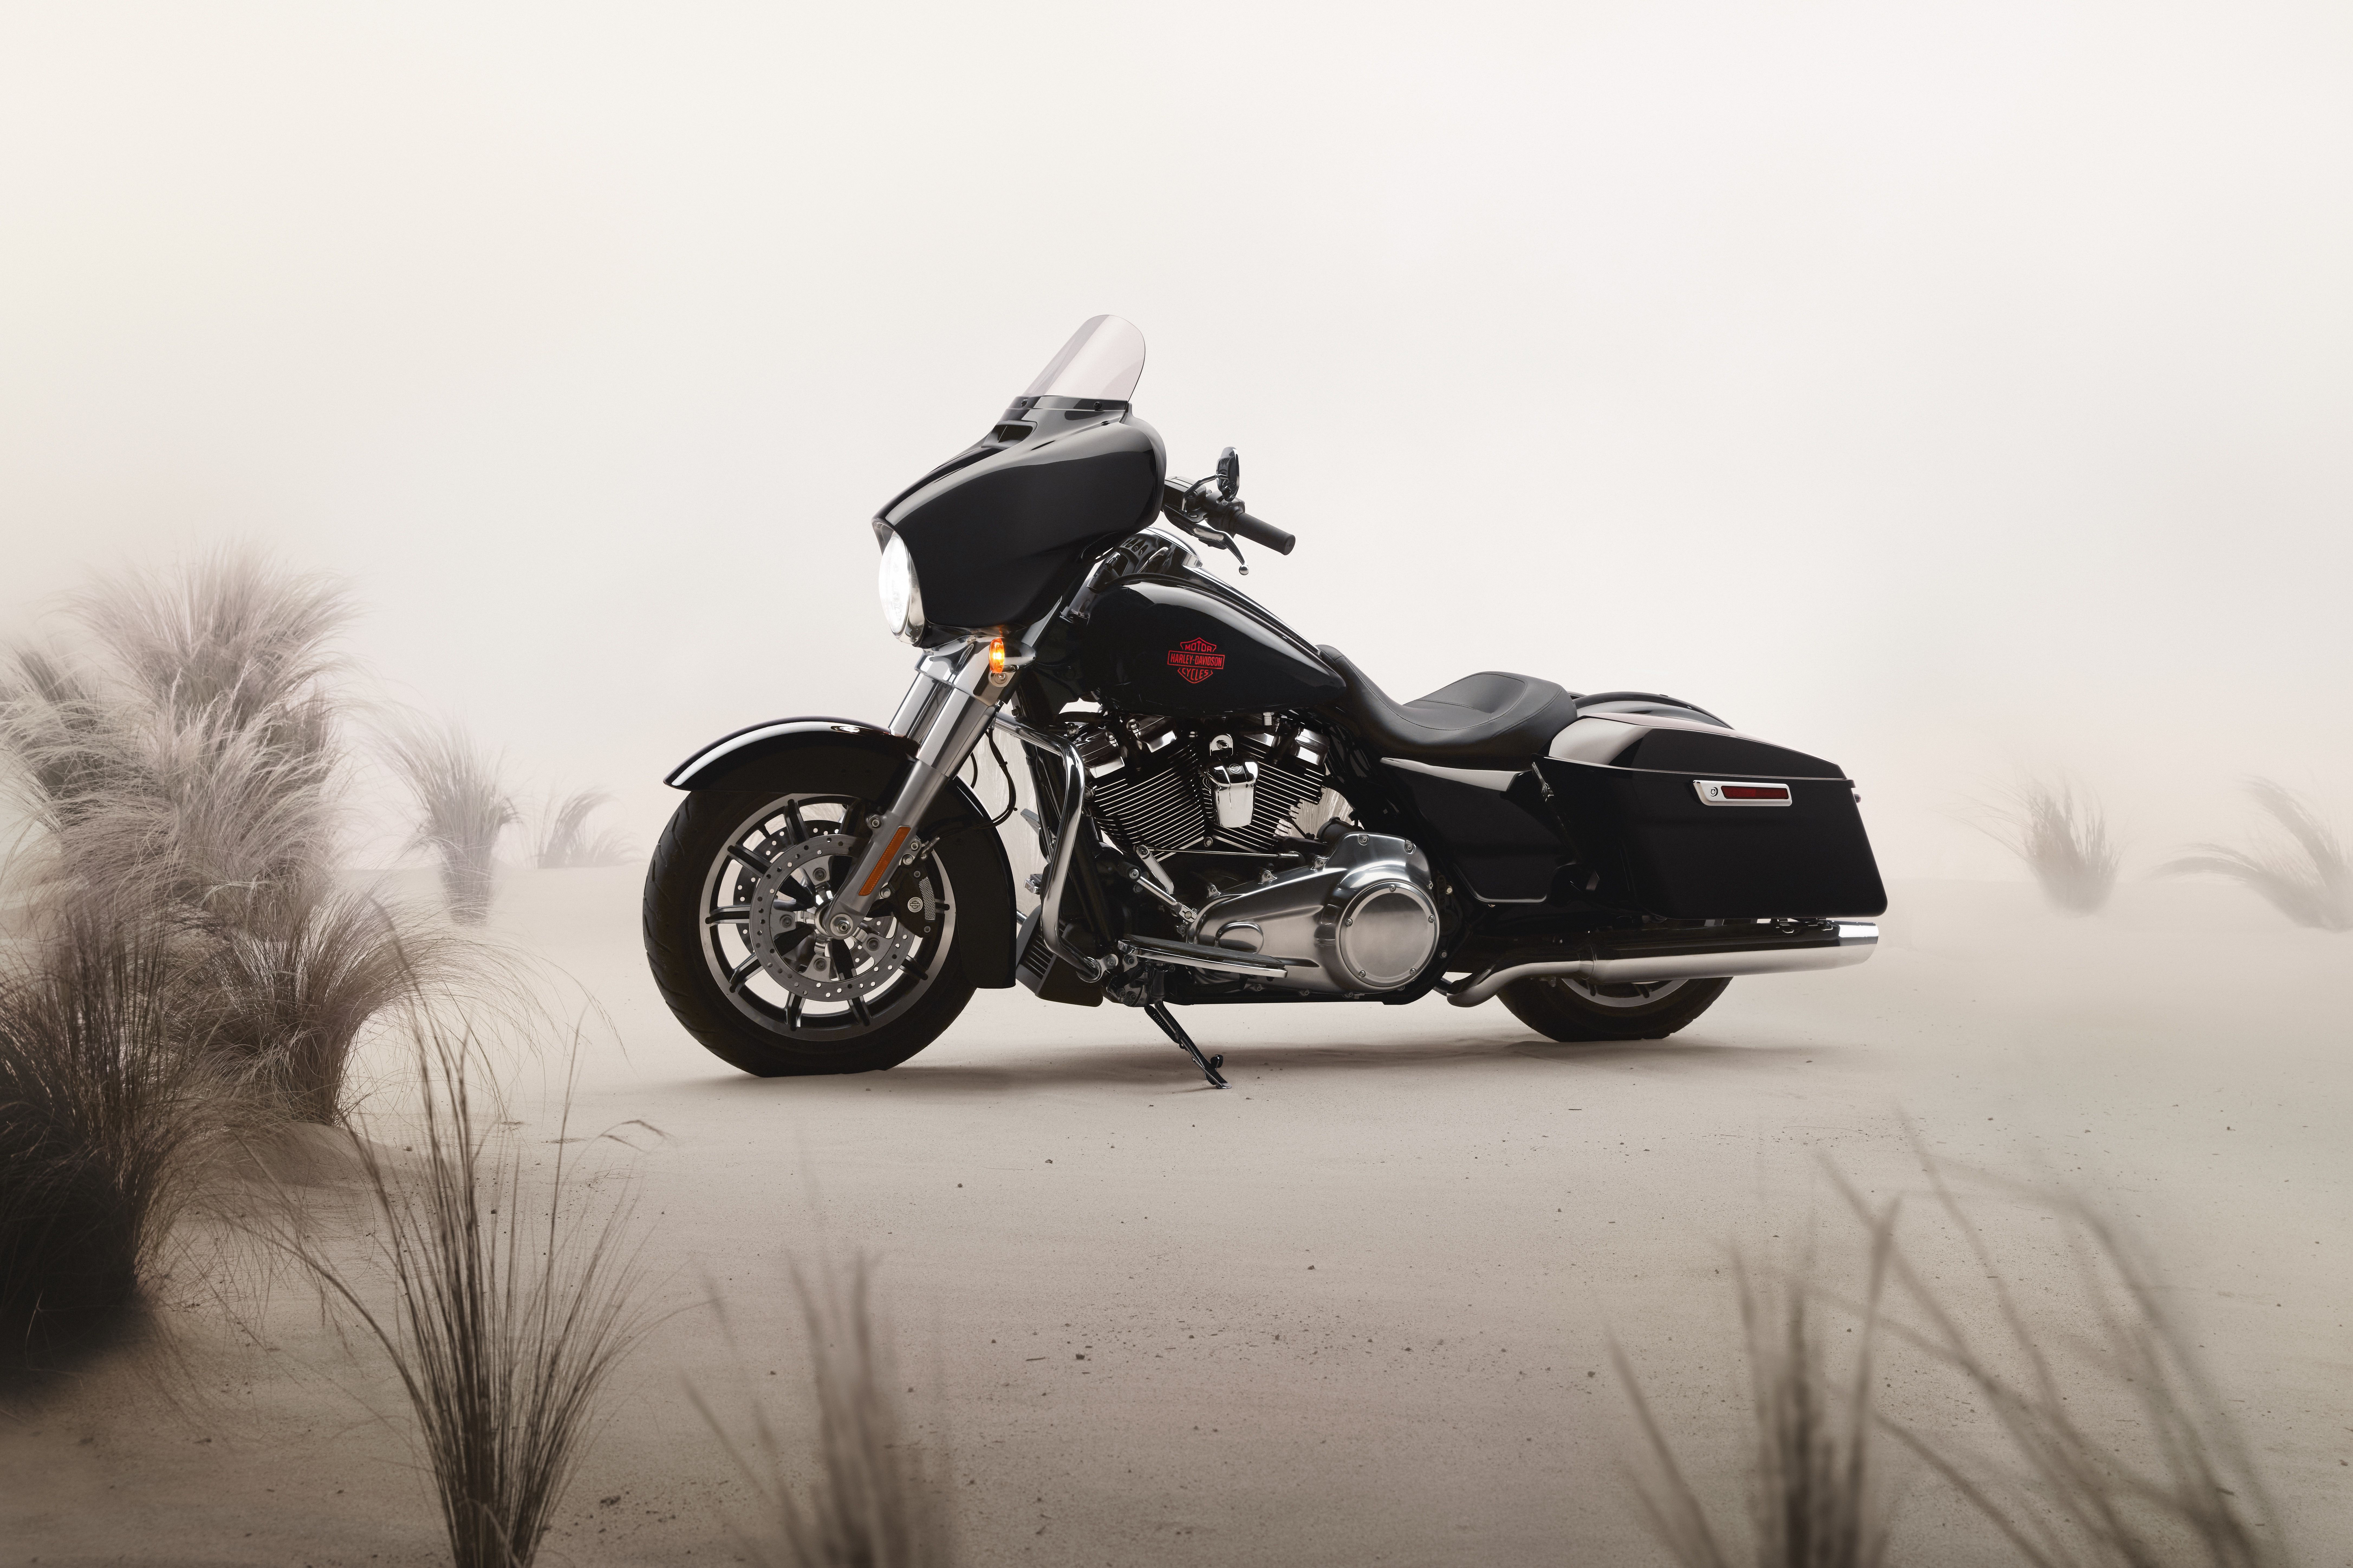 2009 Harley-Davidson Electra Glide Standard Review